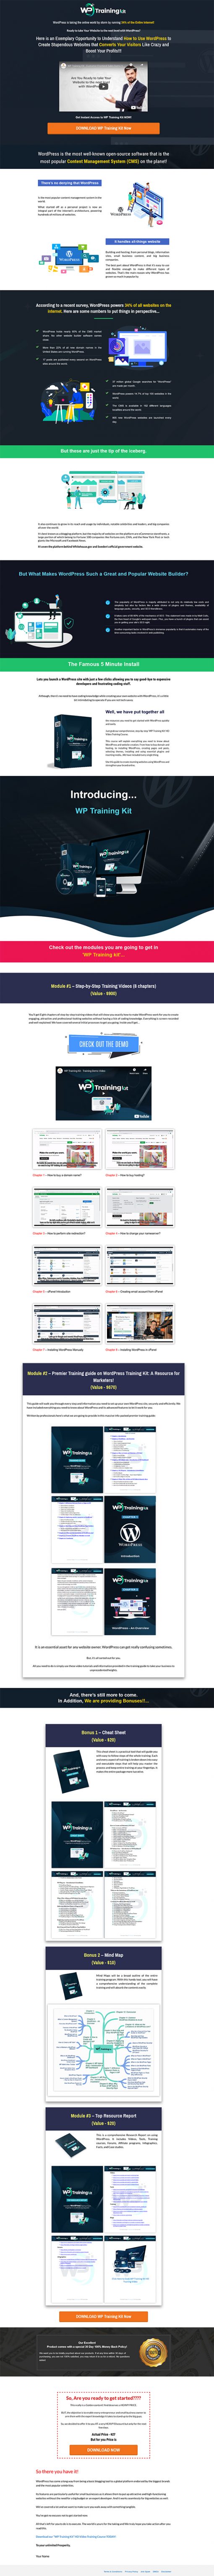 Wordpress Training Kit PLR Ebook and Videos